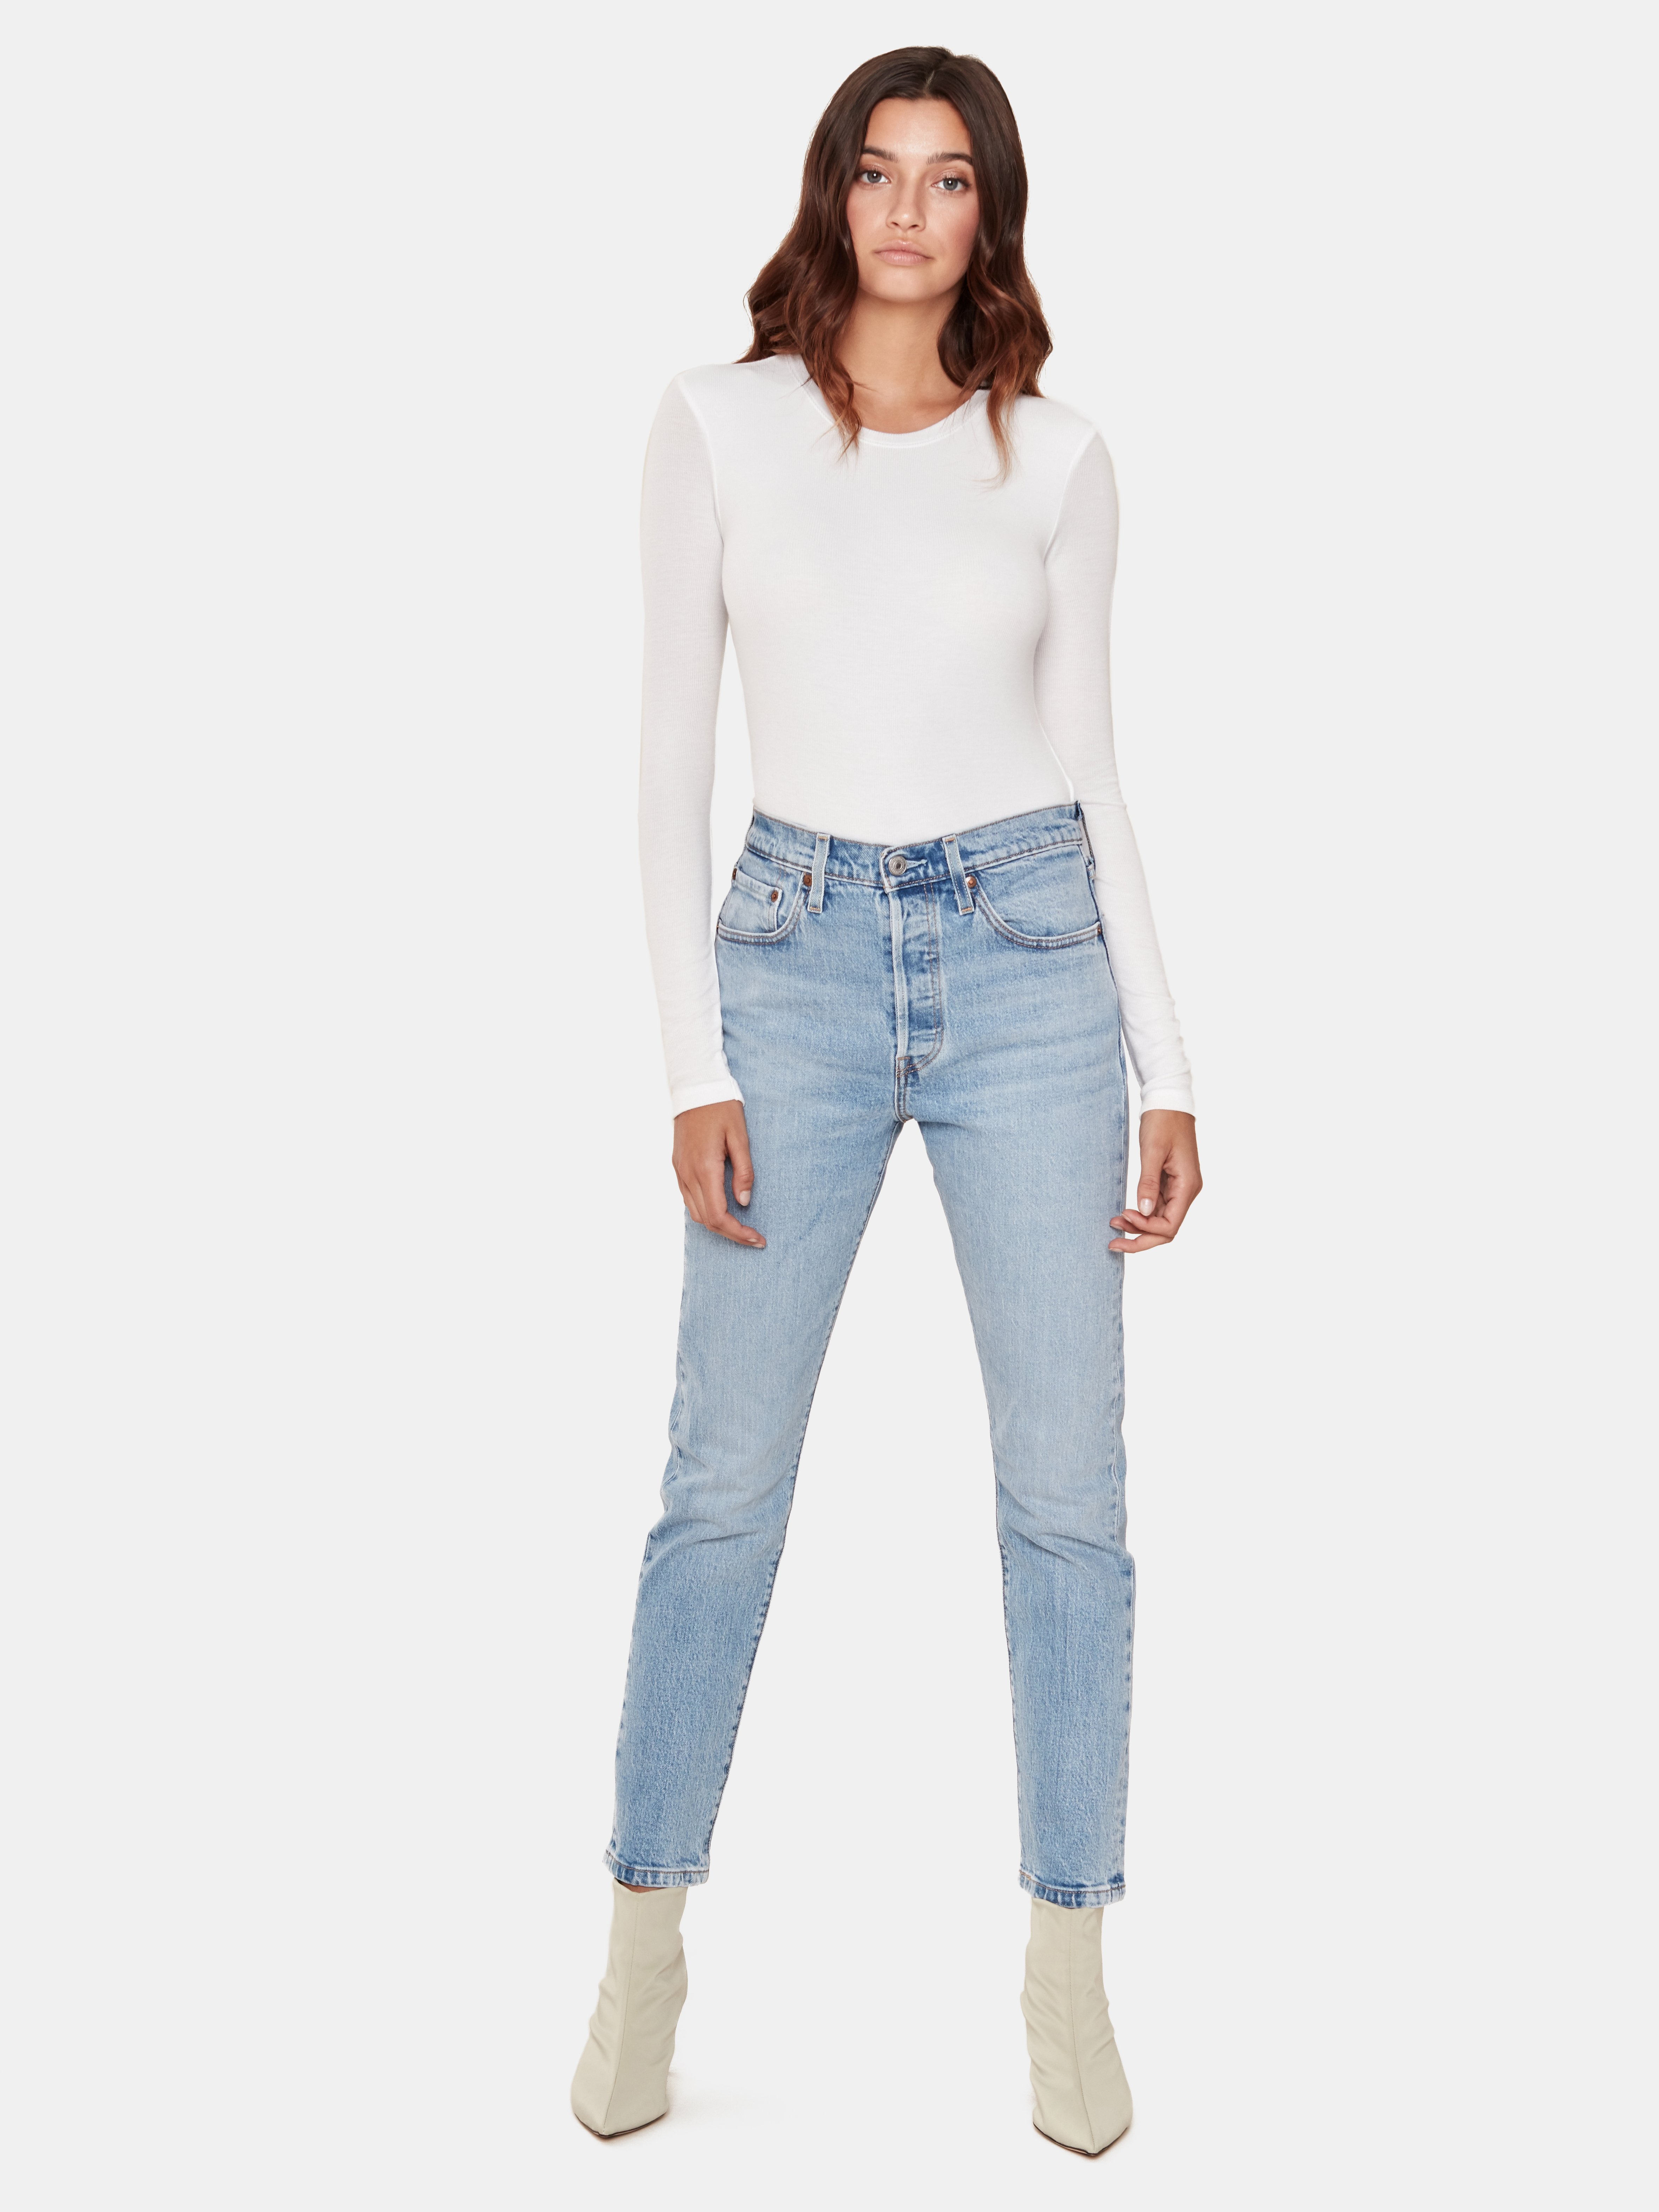 women's levi's 501 straight leg jeans